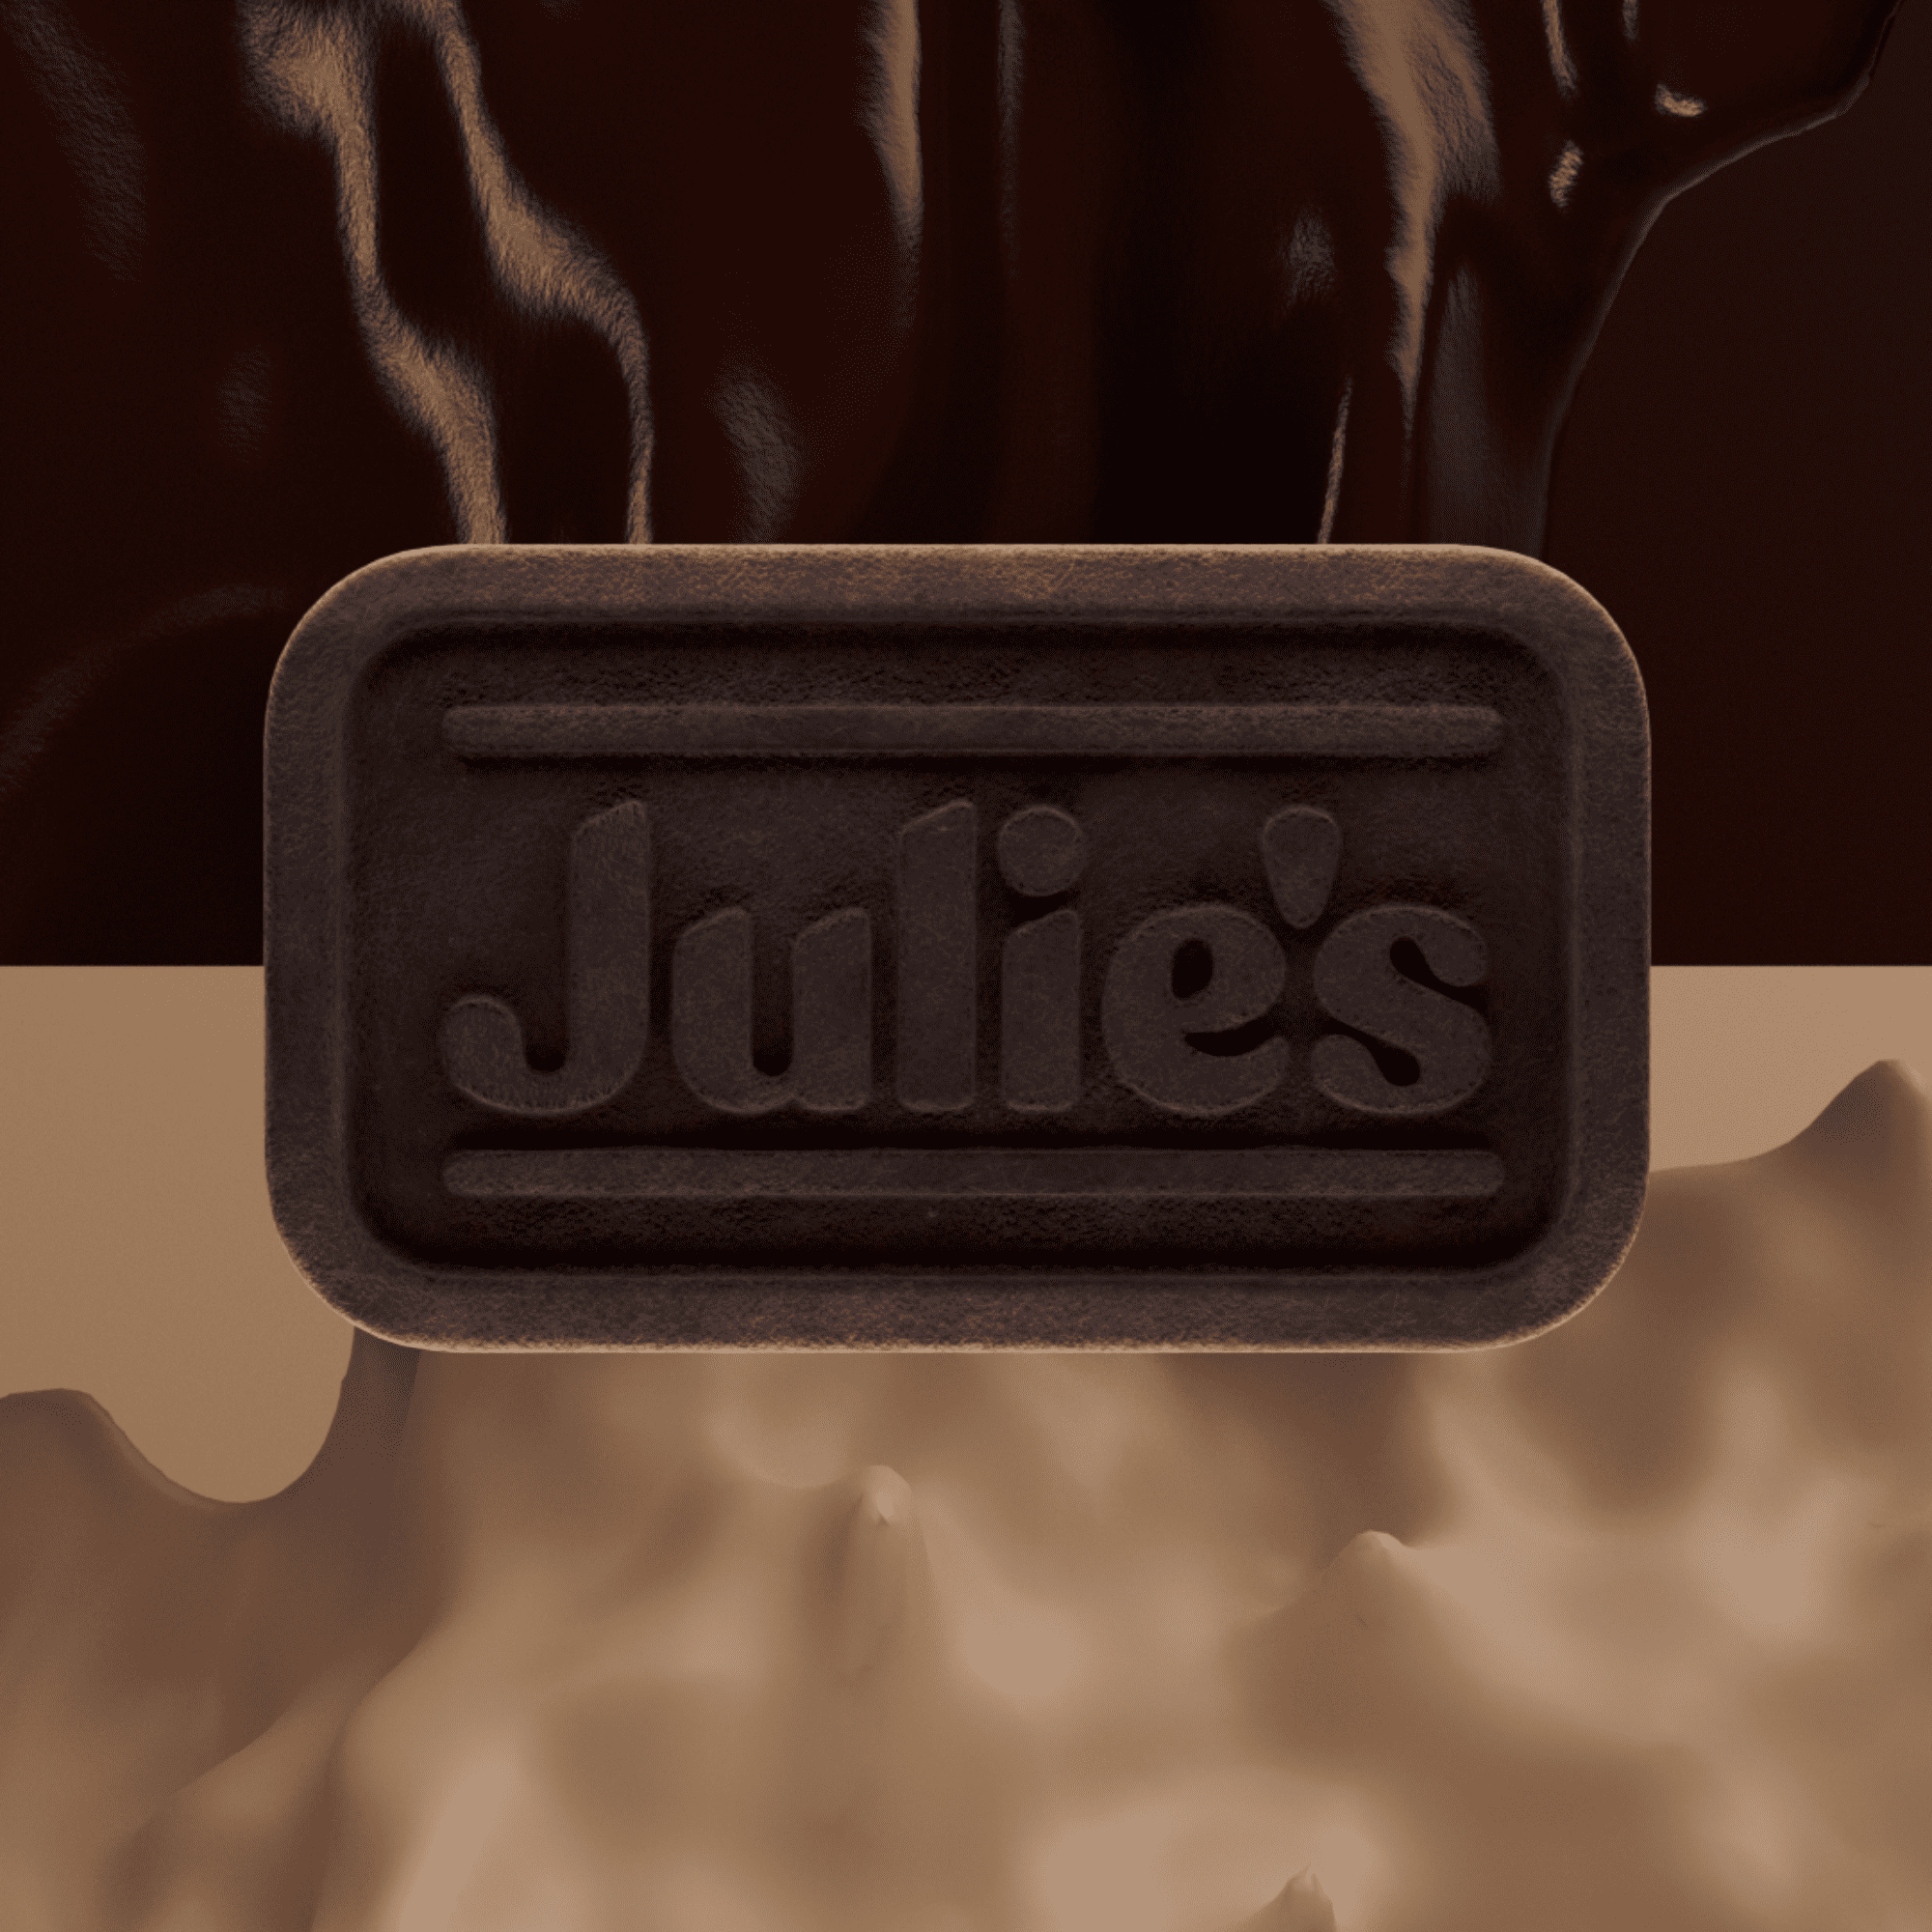 Julie's Charm Double Chocolate Sandwich 172g x 6 packs